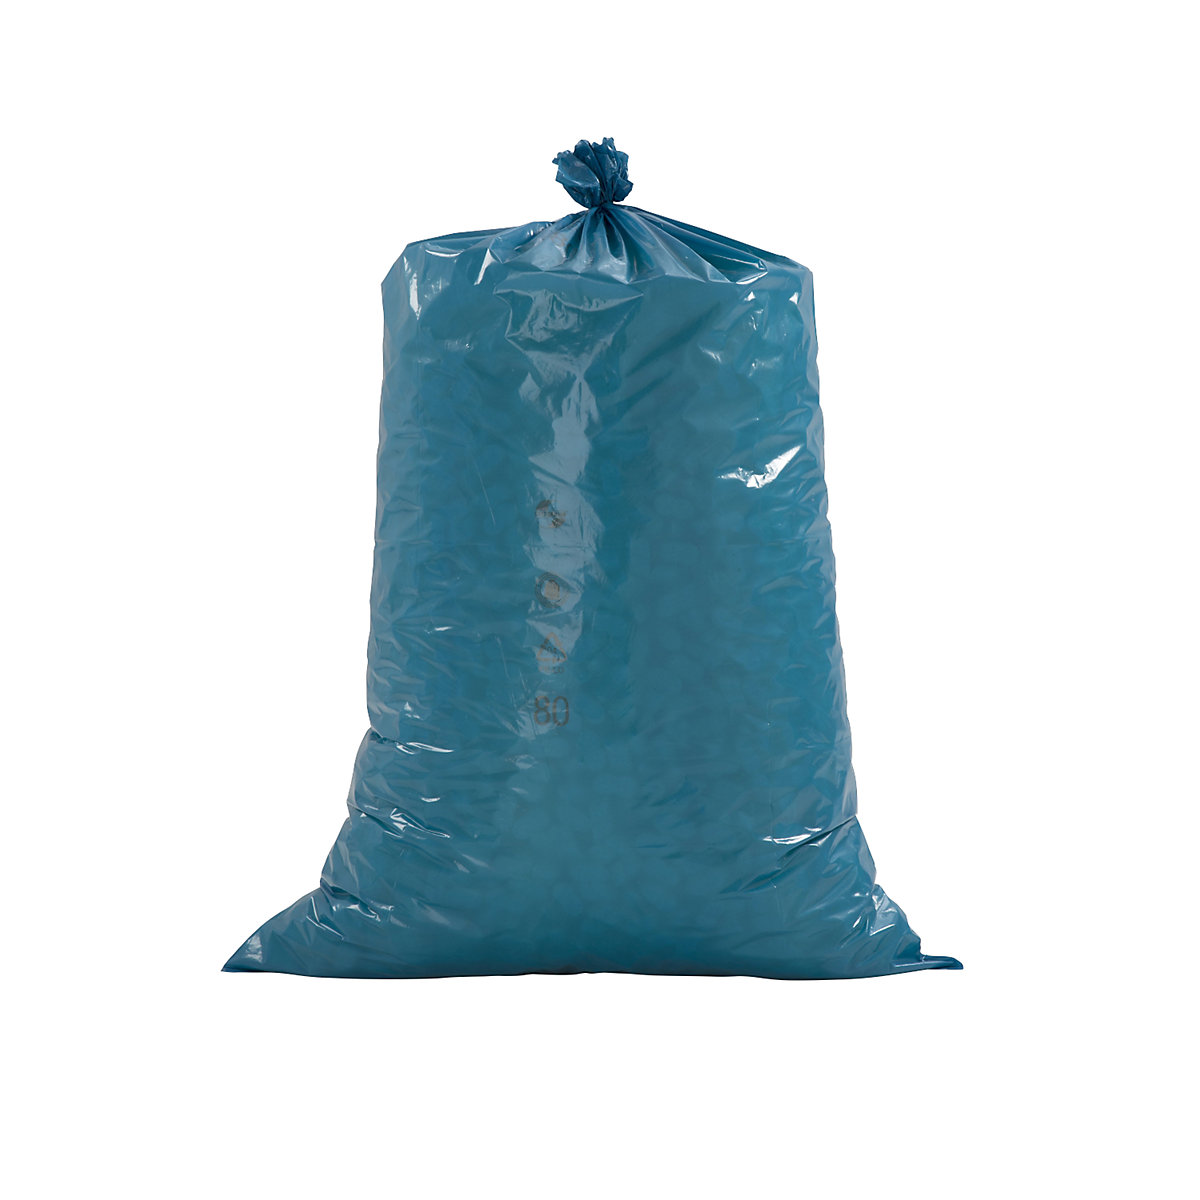 PREMIUM large capacity waste sacks, LDPE